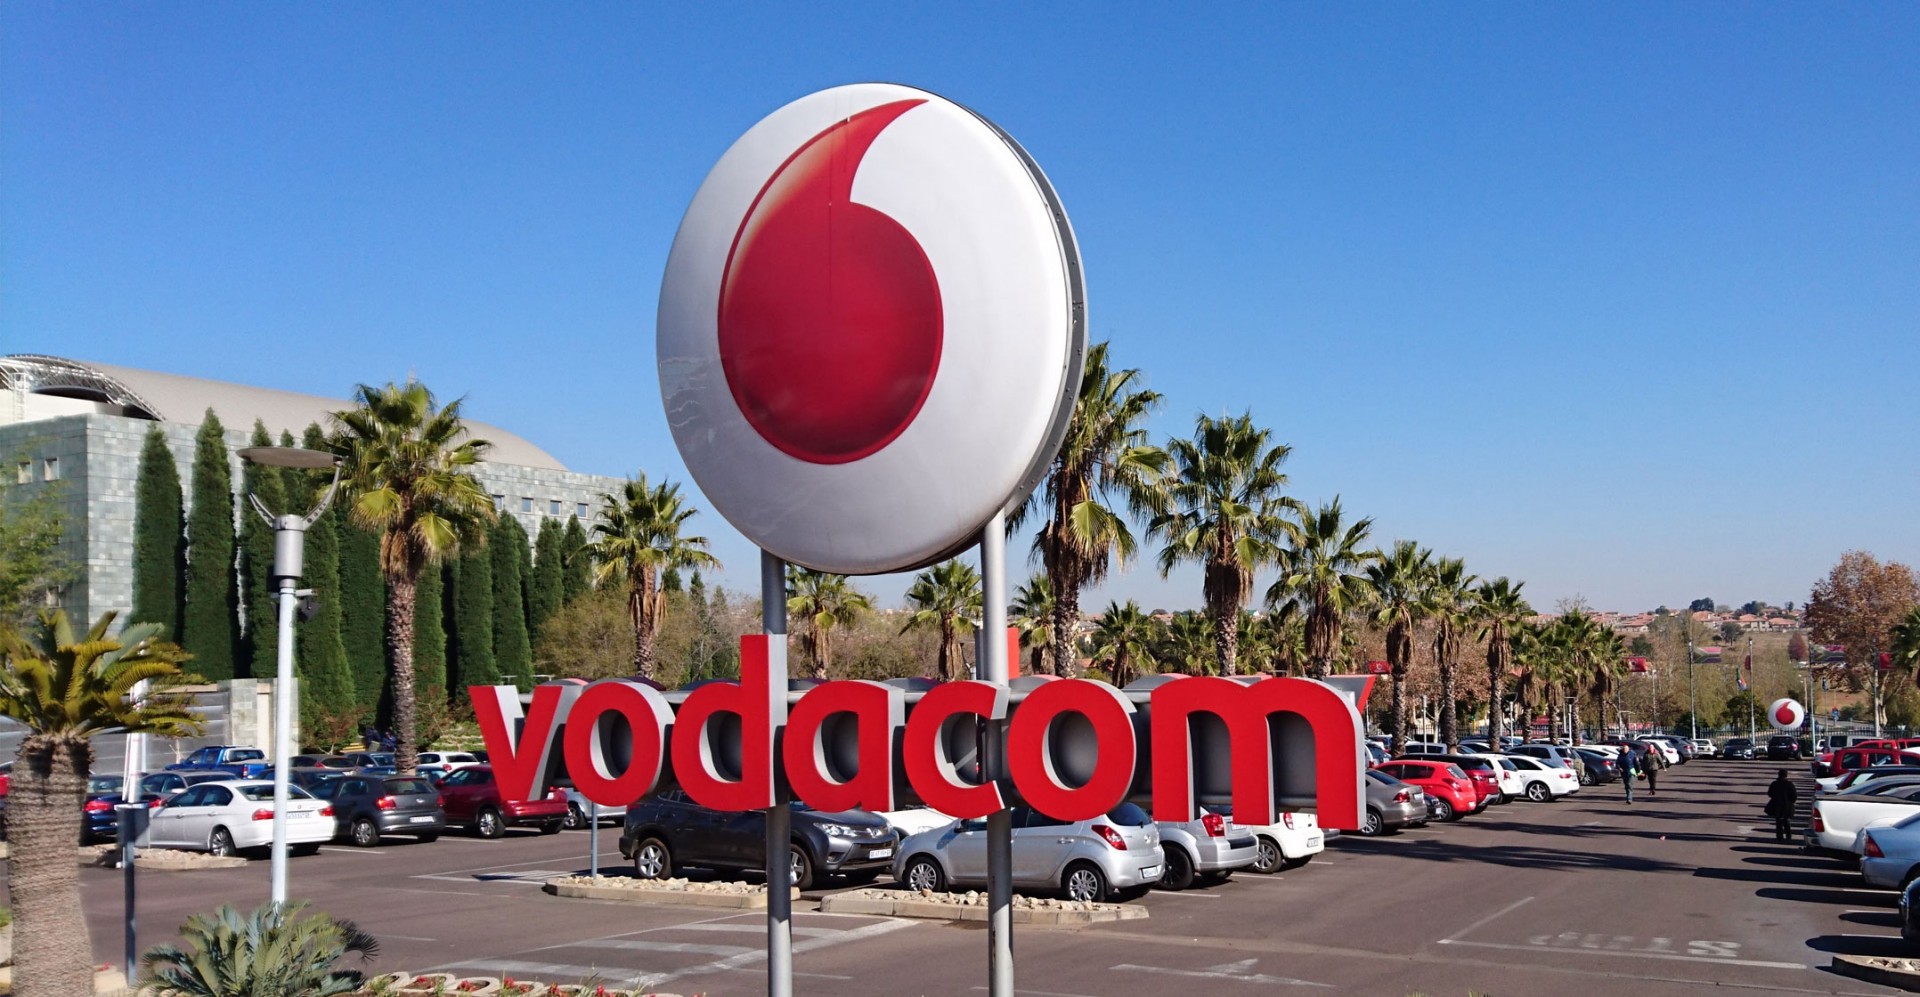 Vodacom South Africa - Halberd Bastion